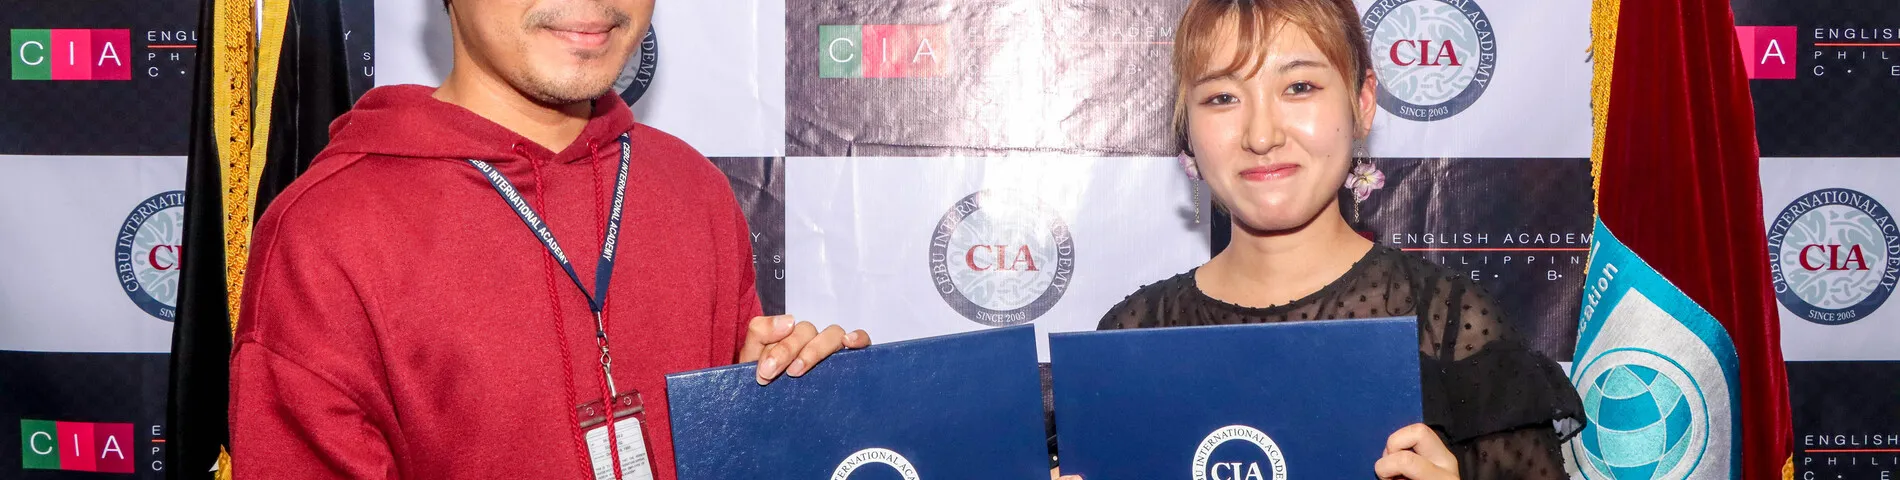 CIA - Cebu International Academy bild 1